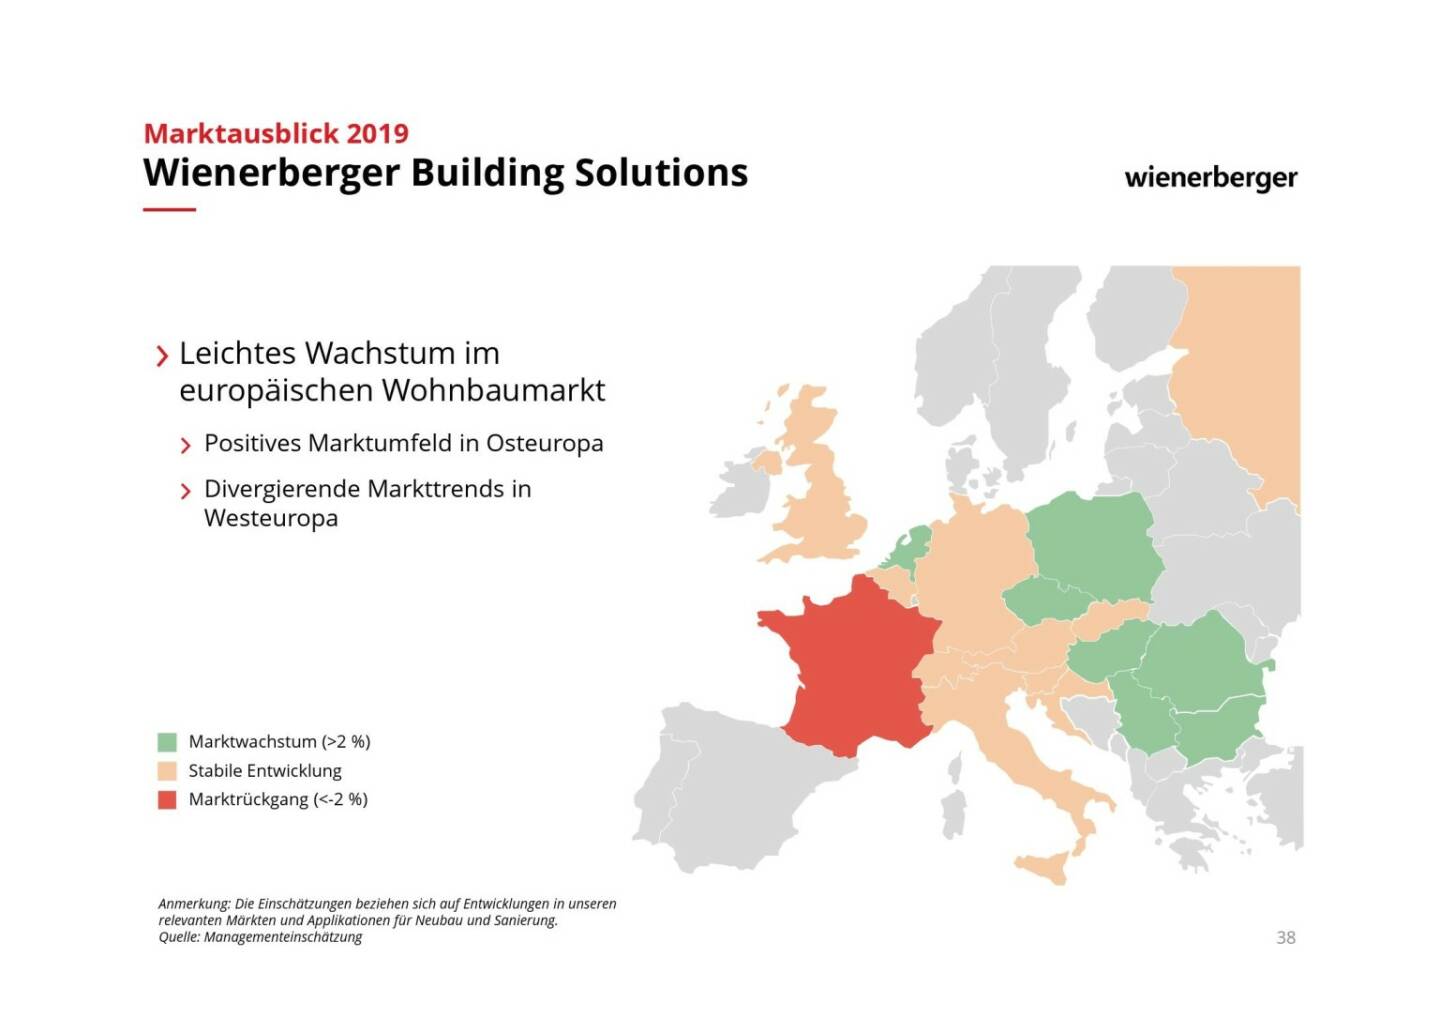 Wienerberger - Wienerberger Building Solutions